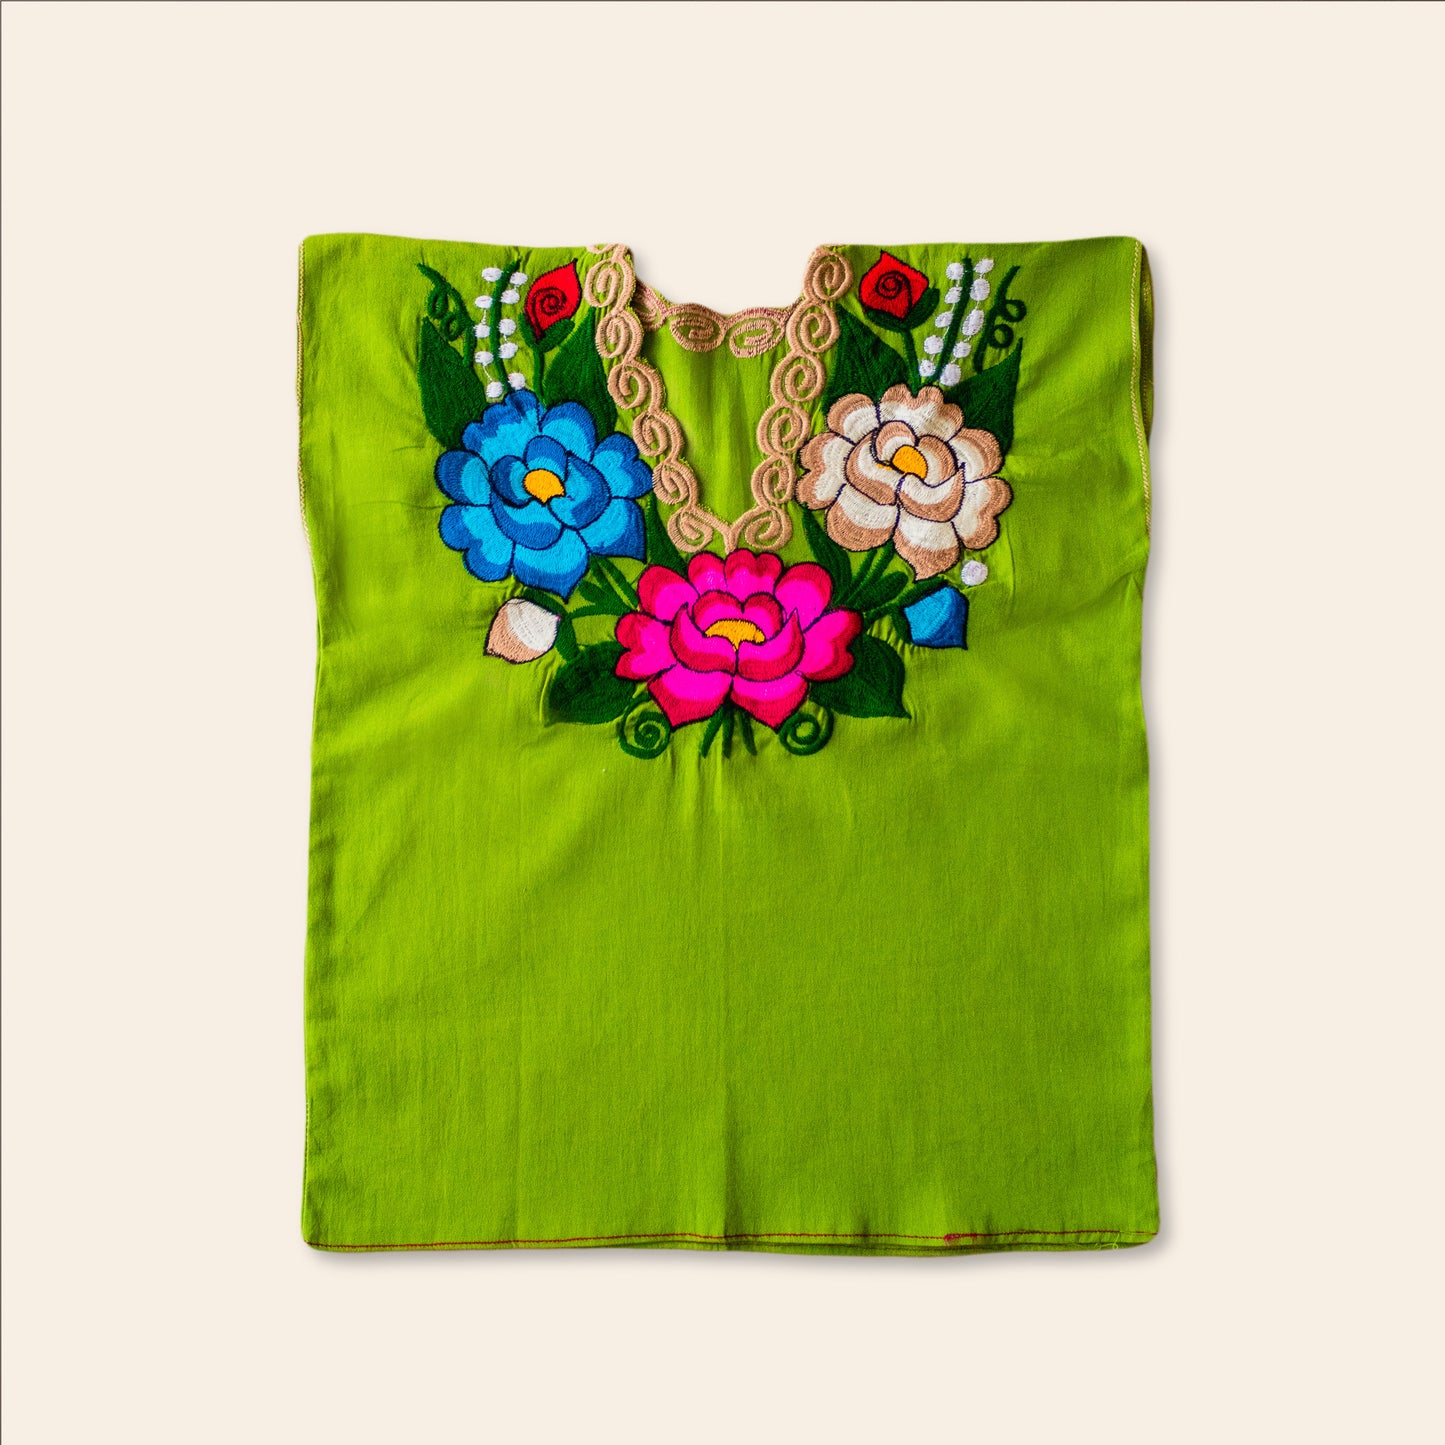 Women Embroidered Tops Shirt